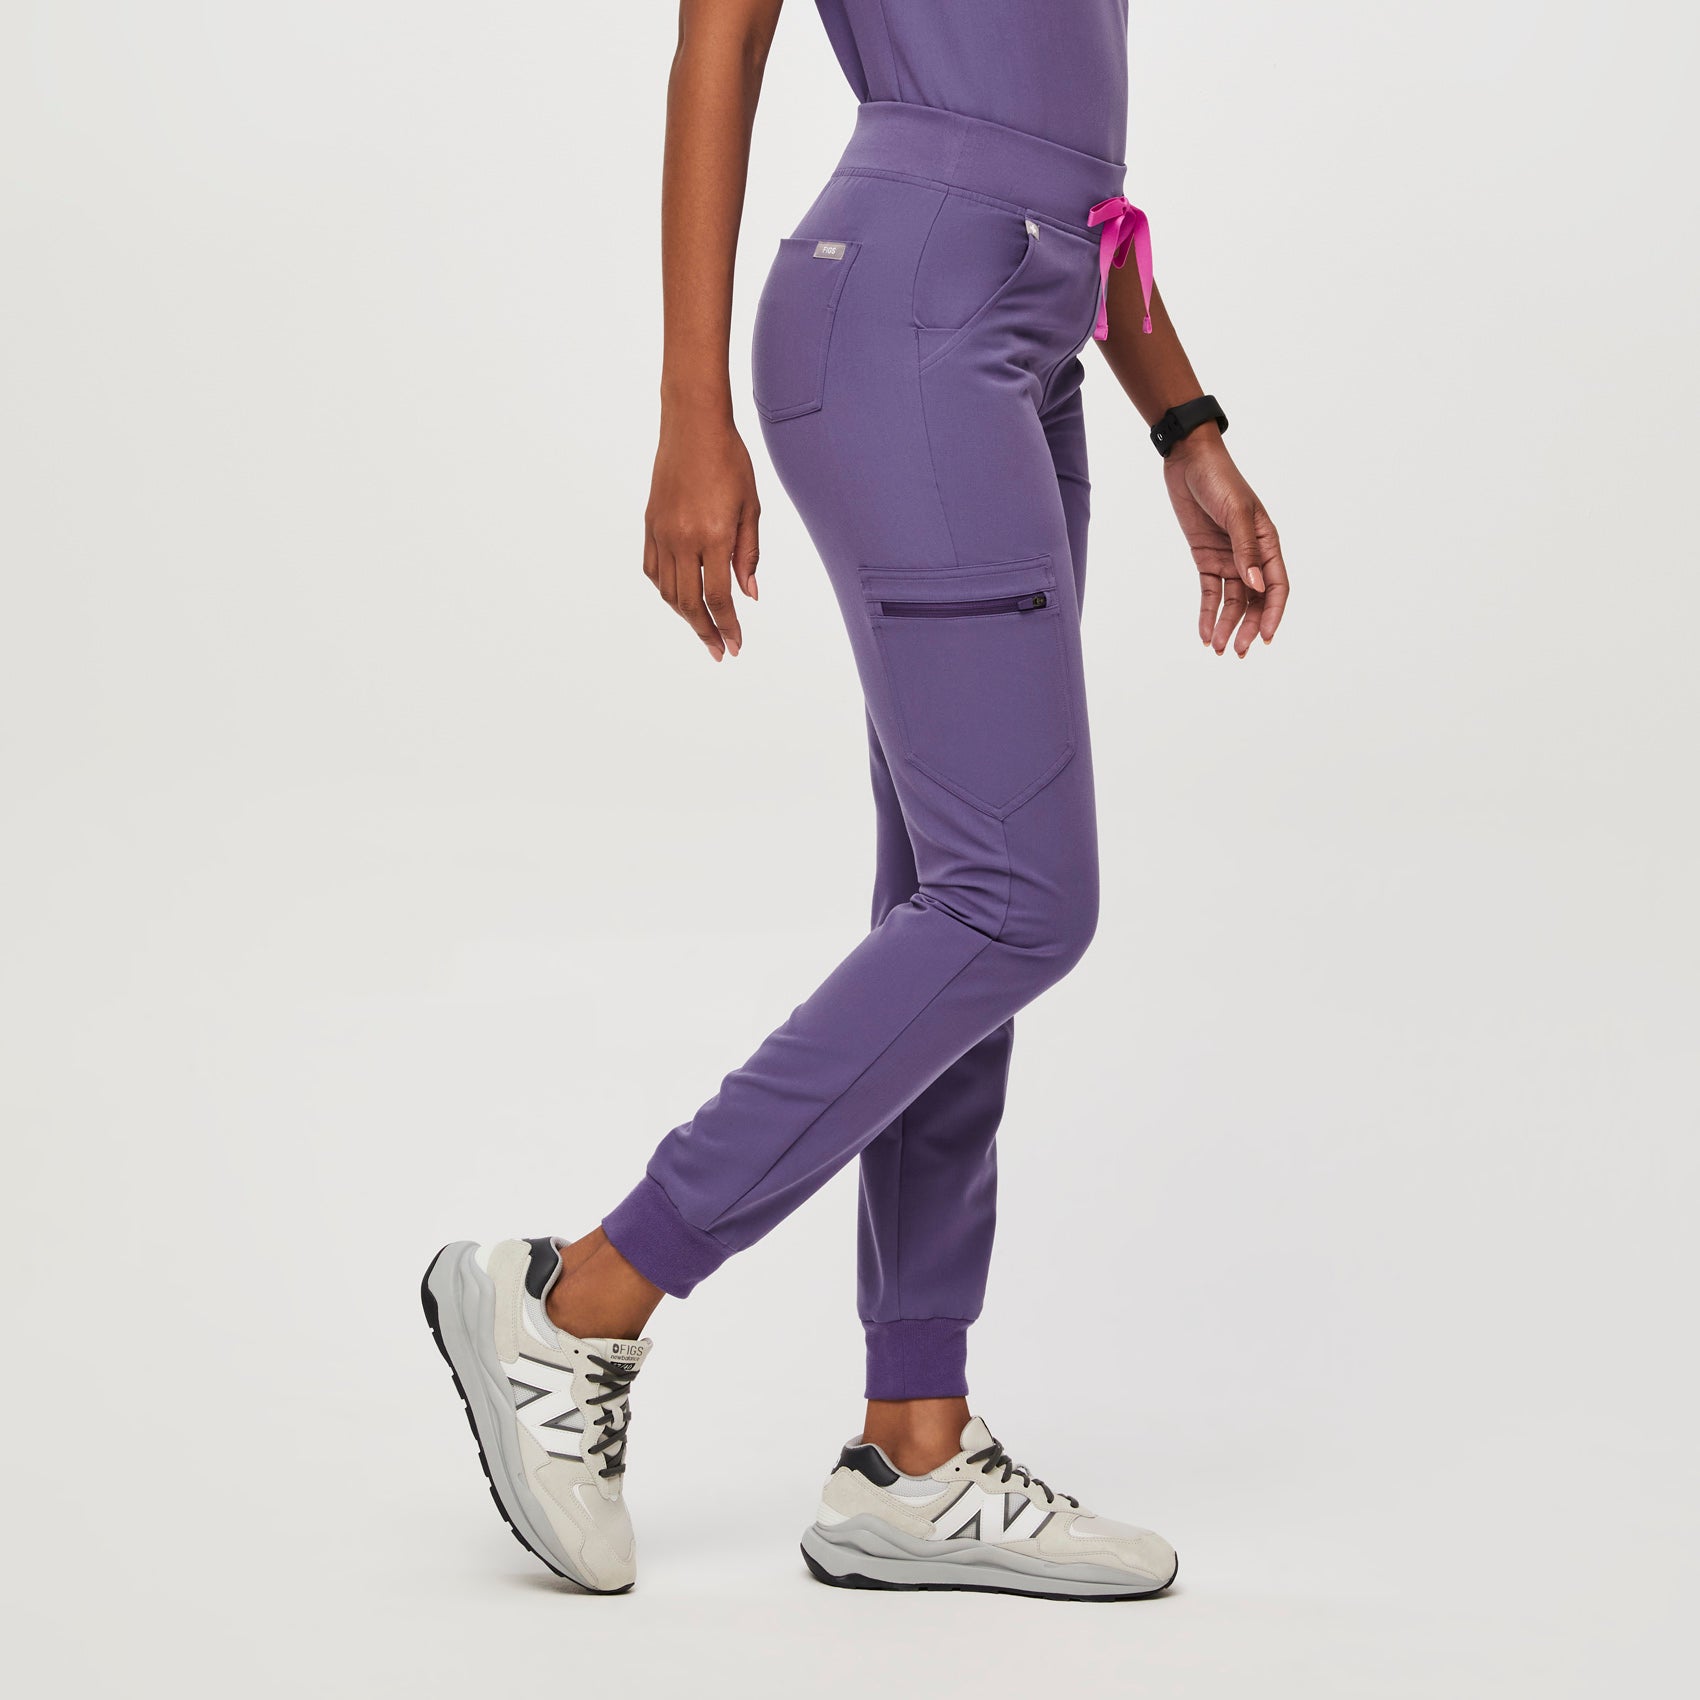 Pantalones deportivos para mujer con bolsillos laterales con cordón  Pantalones Joggers Yoga yeacher